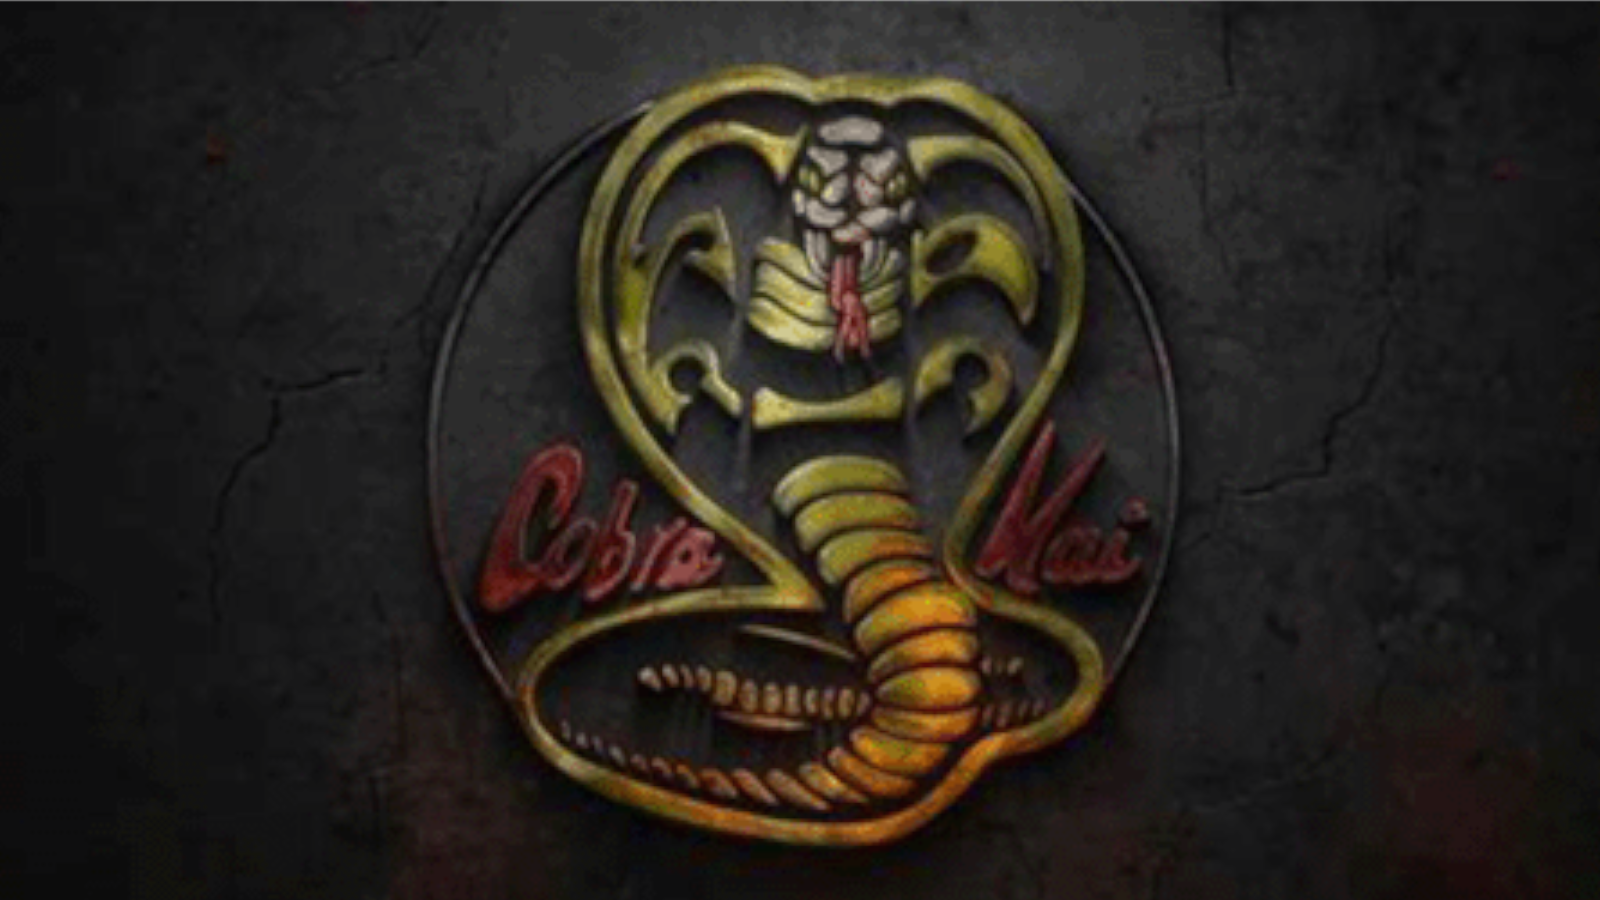 Cobra Kai  The Banner